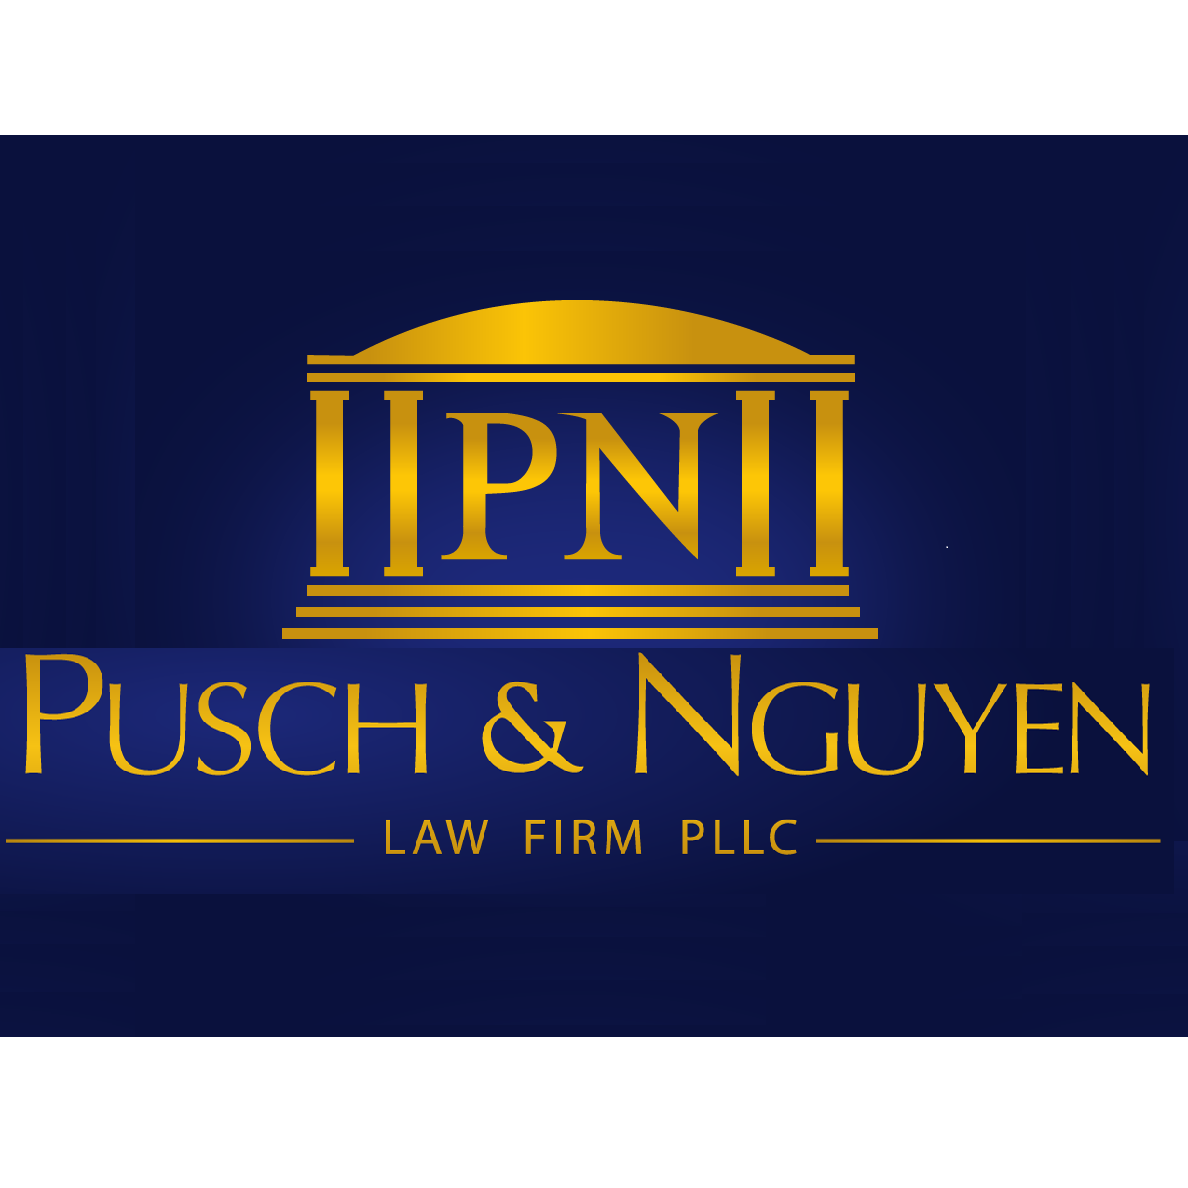 Pusch & Nguyen Law Firm Logo